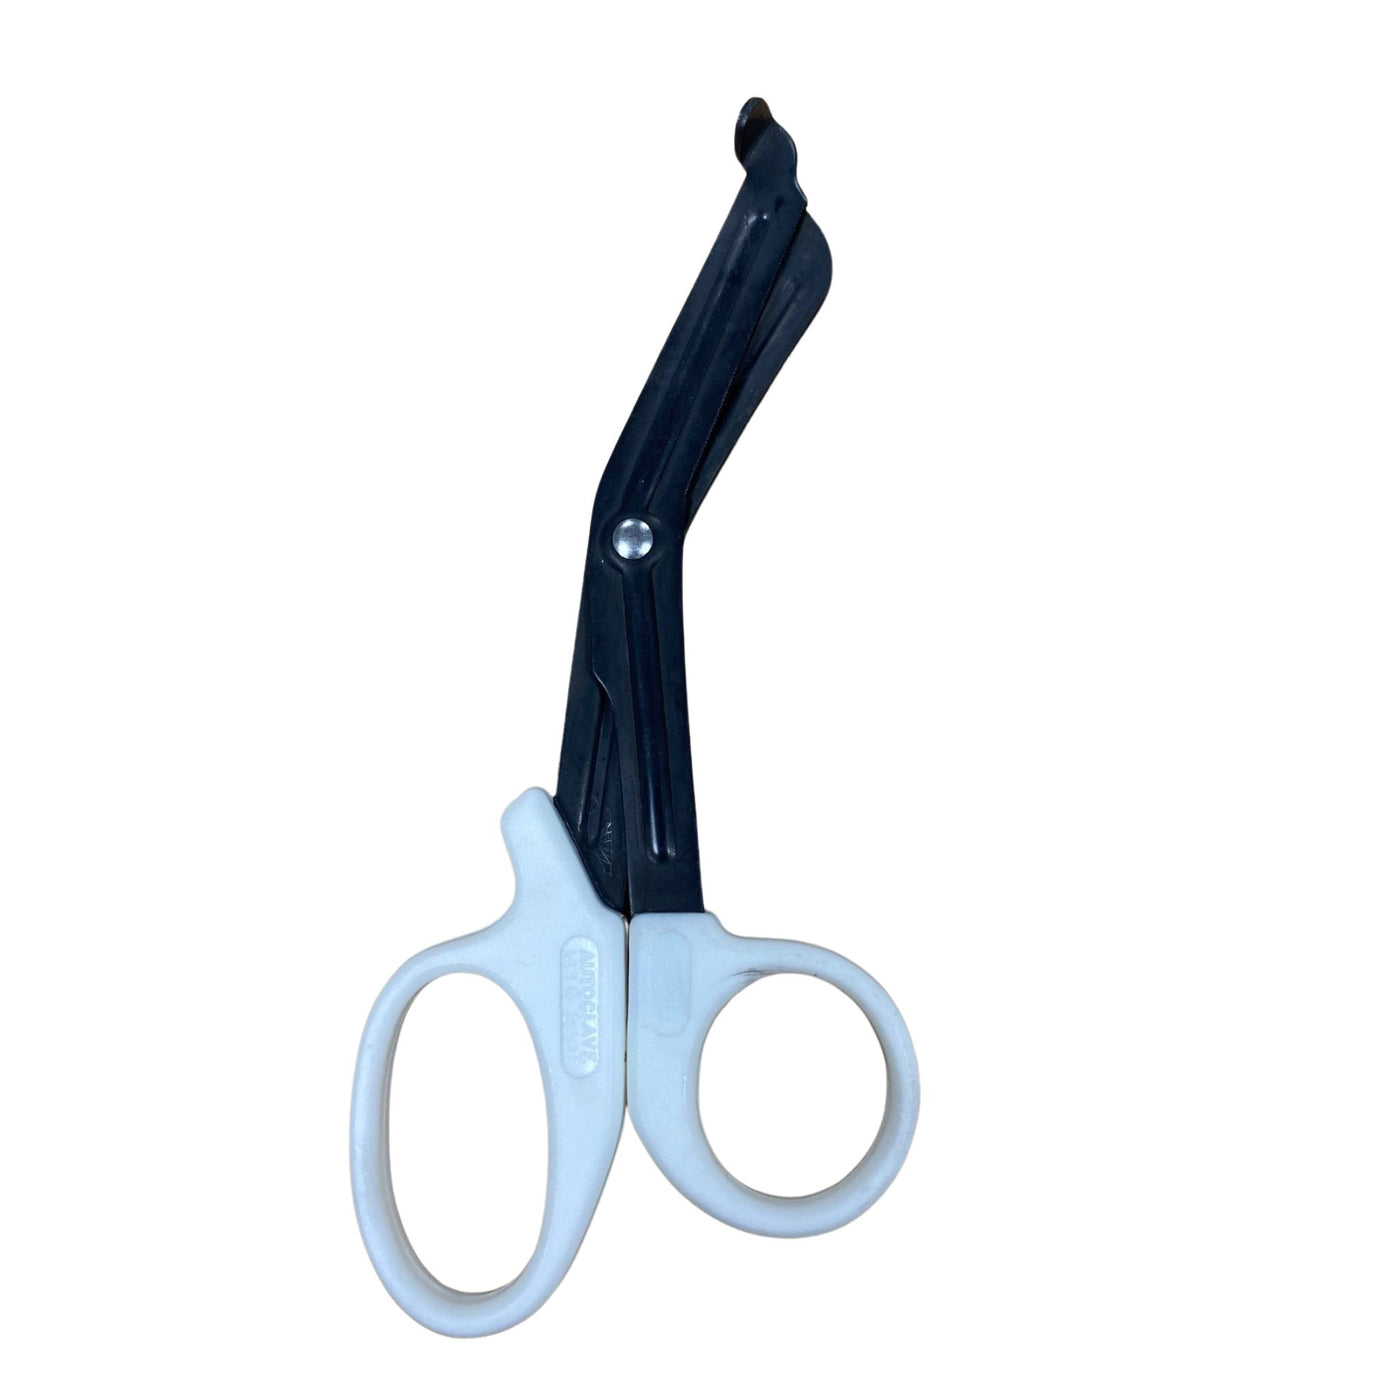 CLEARANCE - 5.5 Utility Scissors White Handles & Black Blades